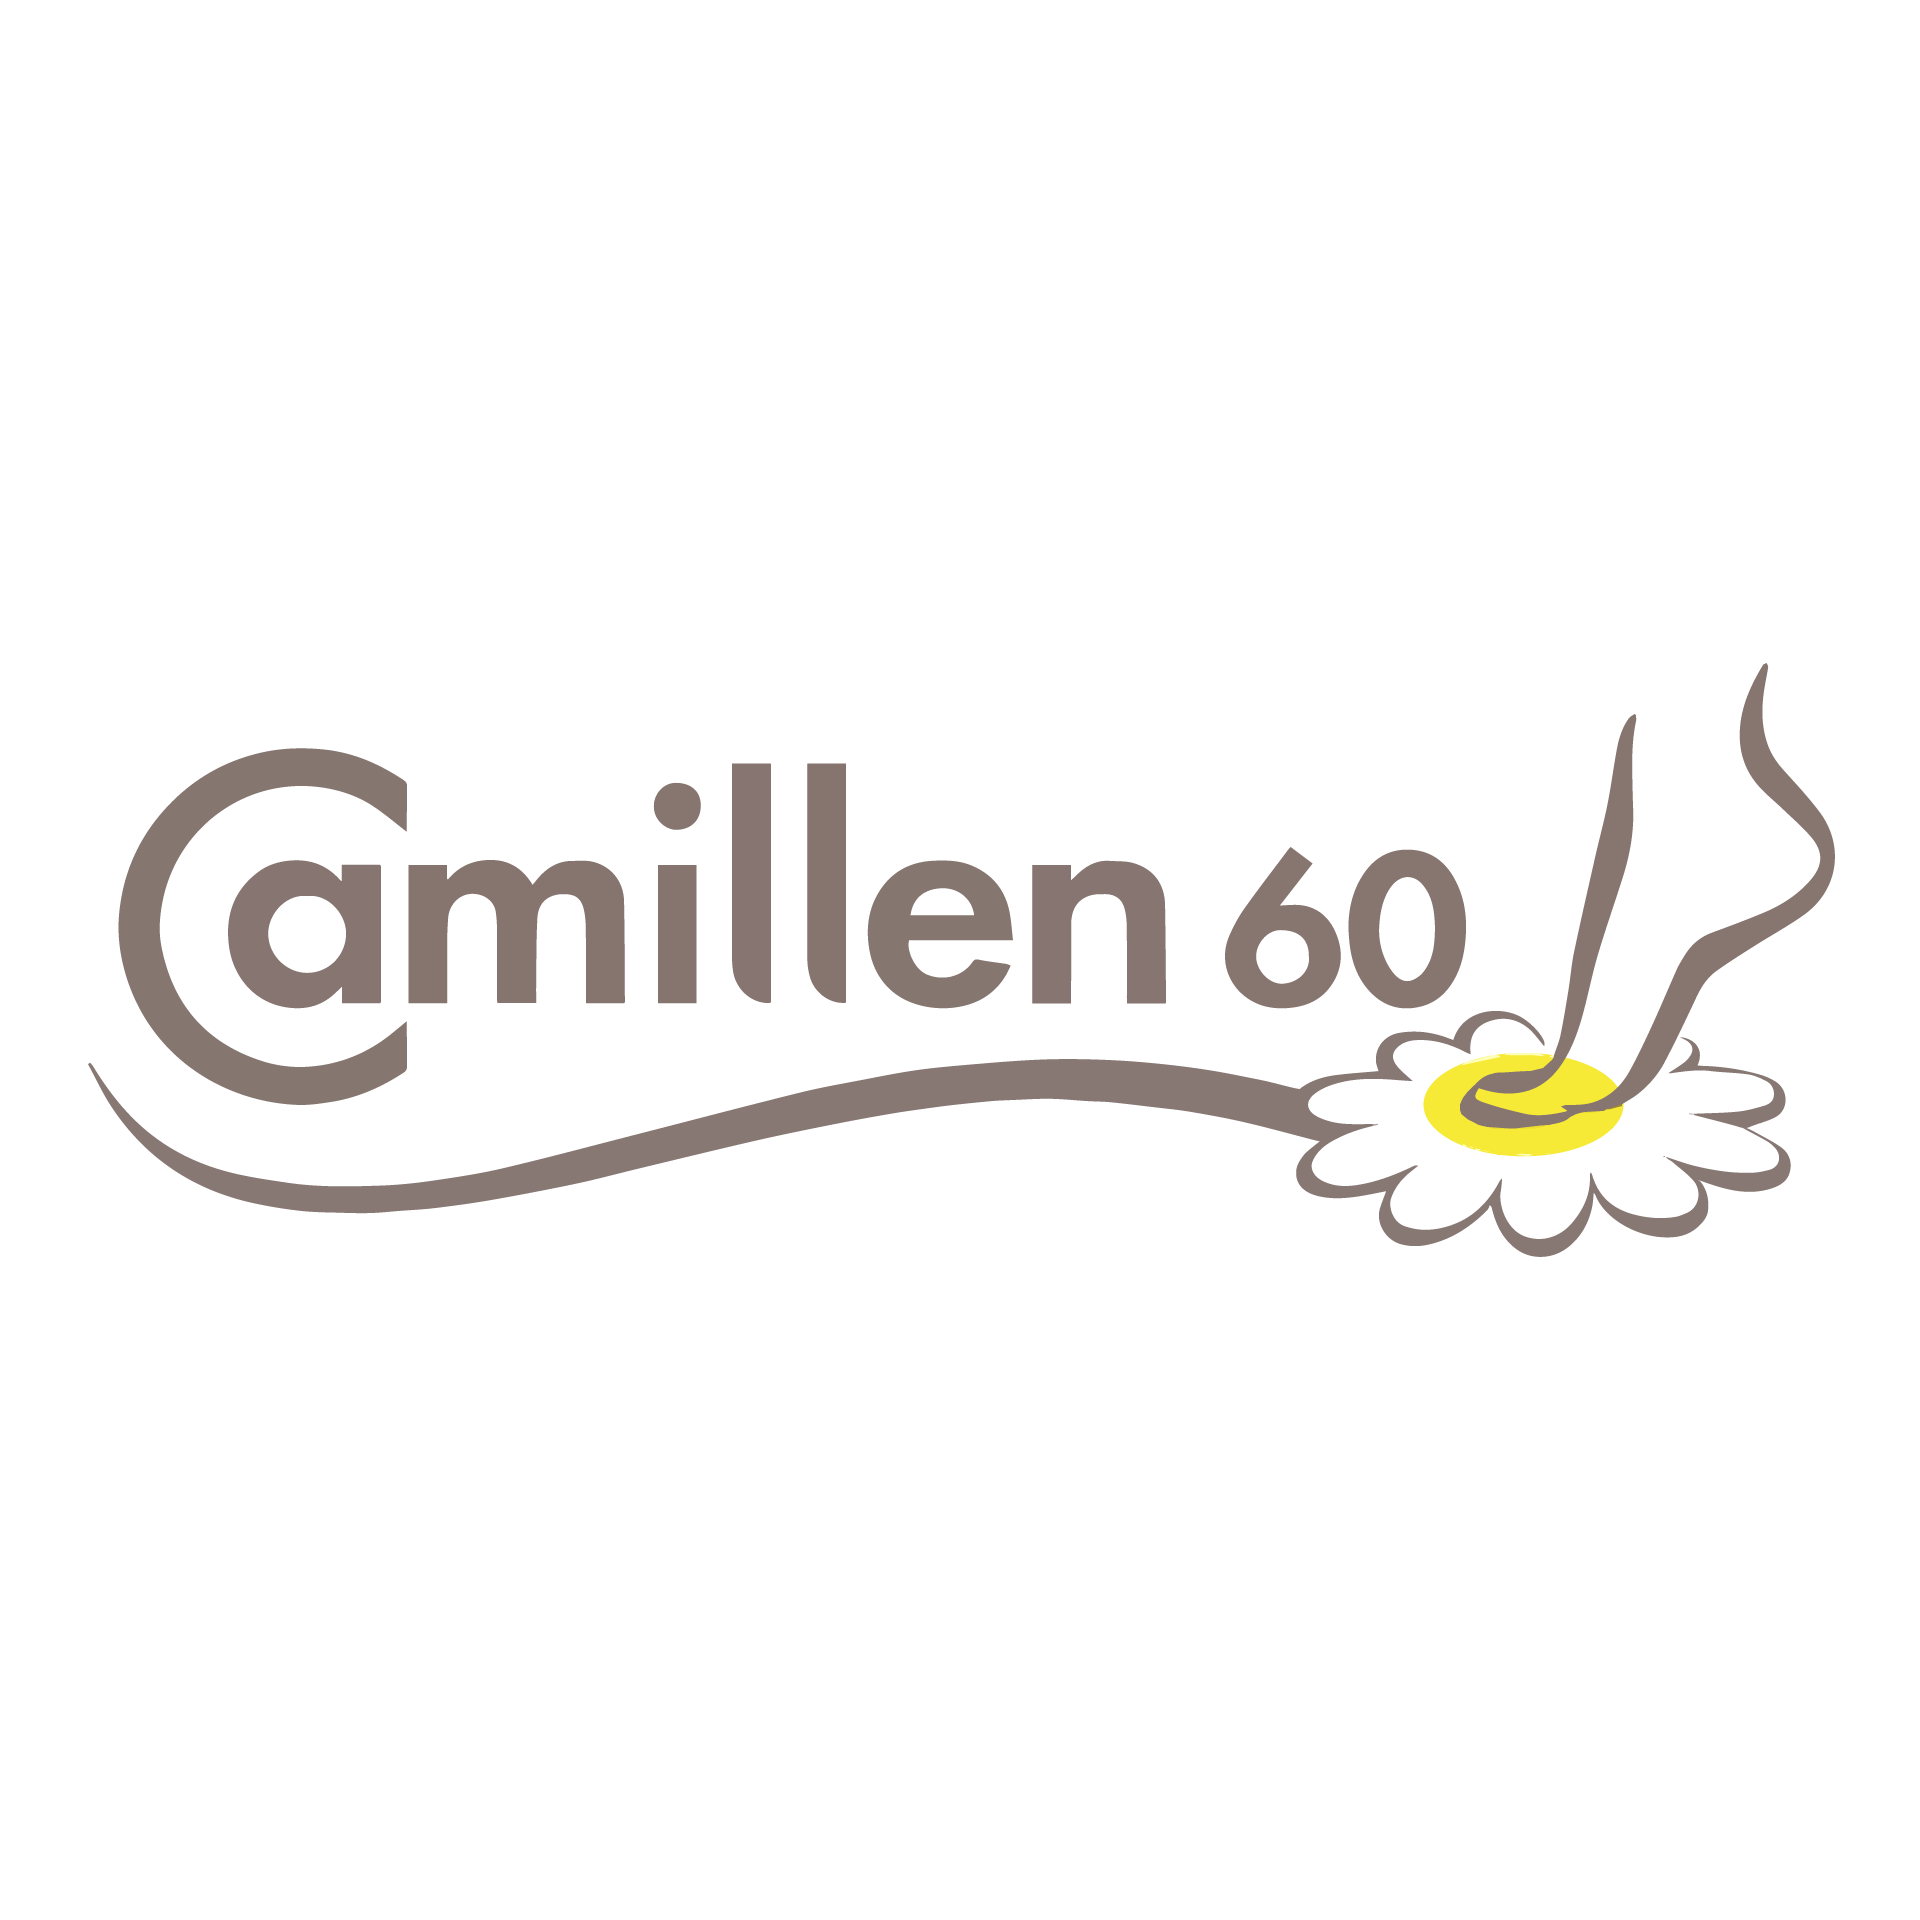 Camillen 60 ייצור ופיתוח מוצרי טיפוח רגליים וידיים